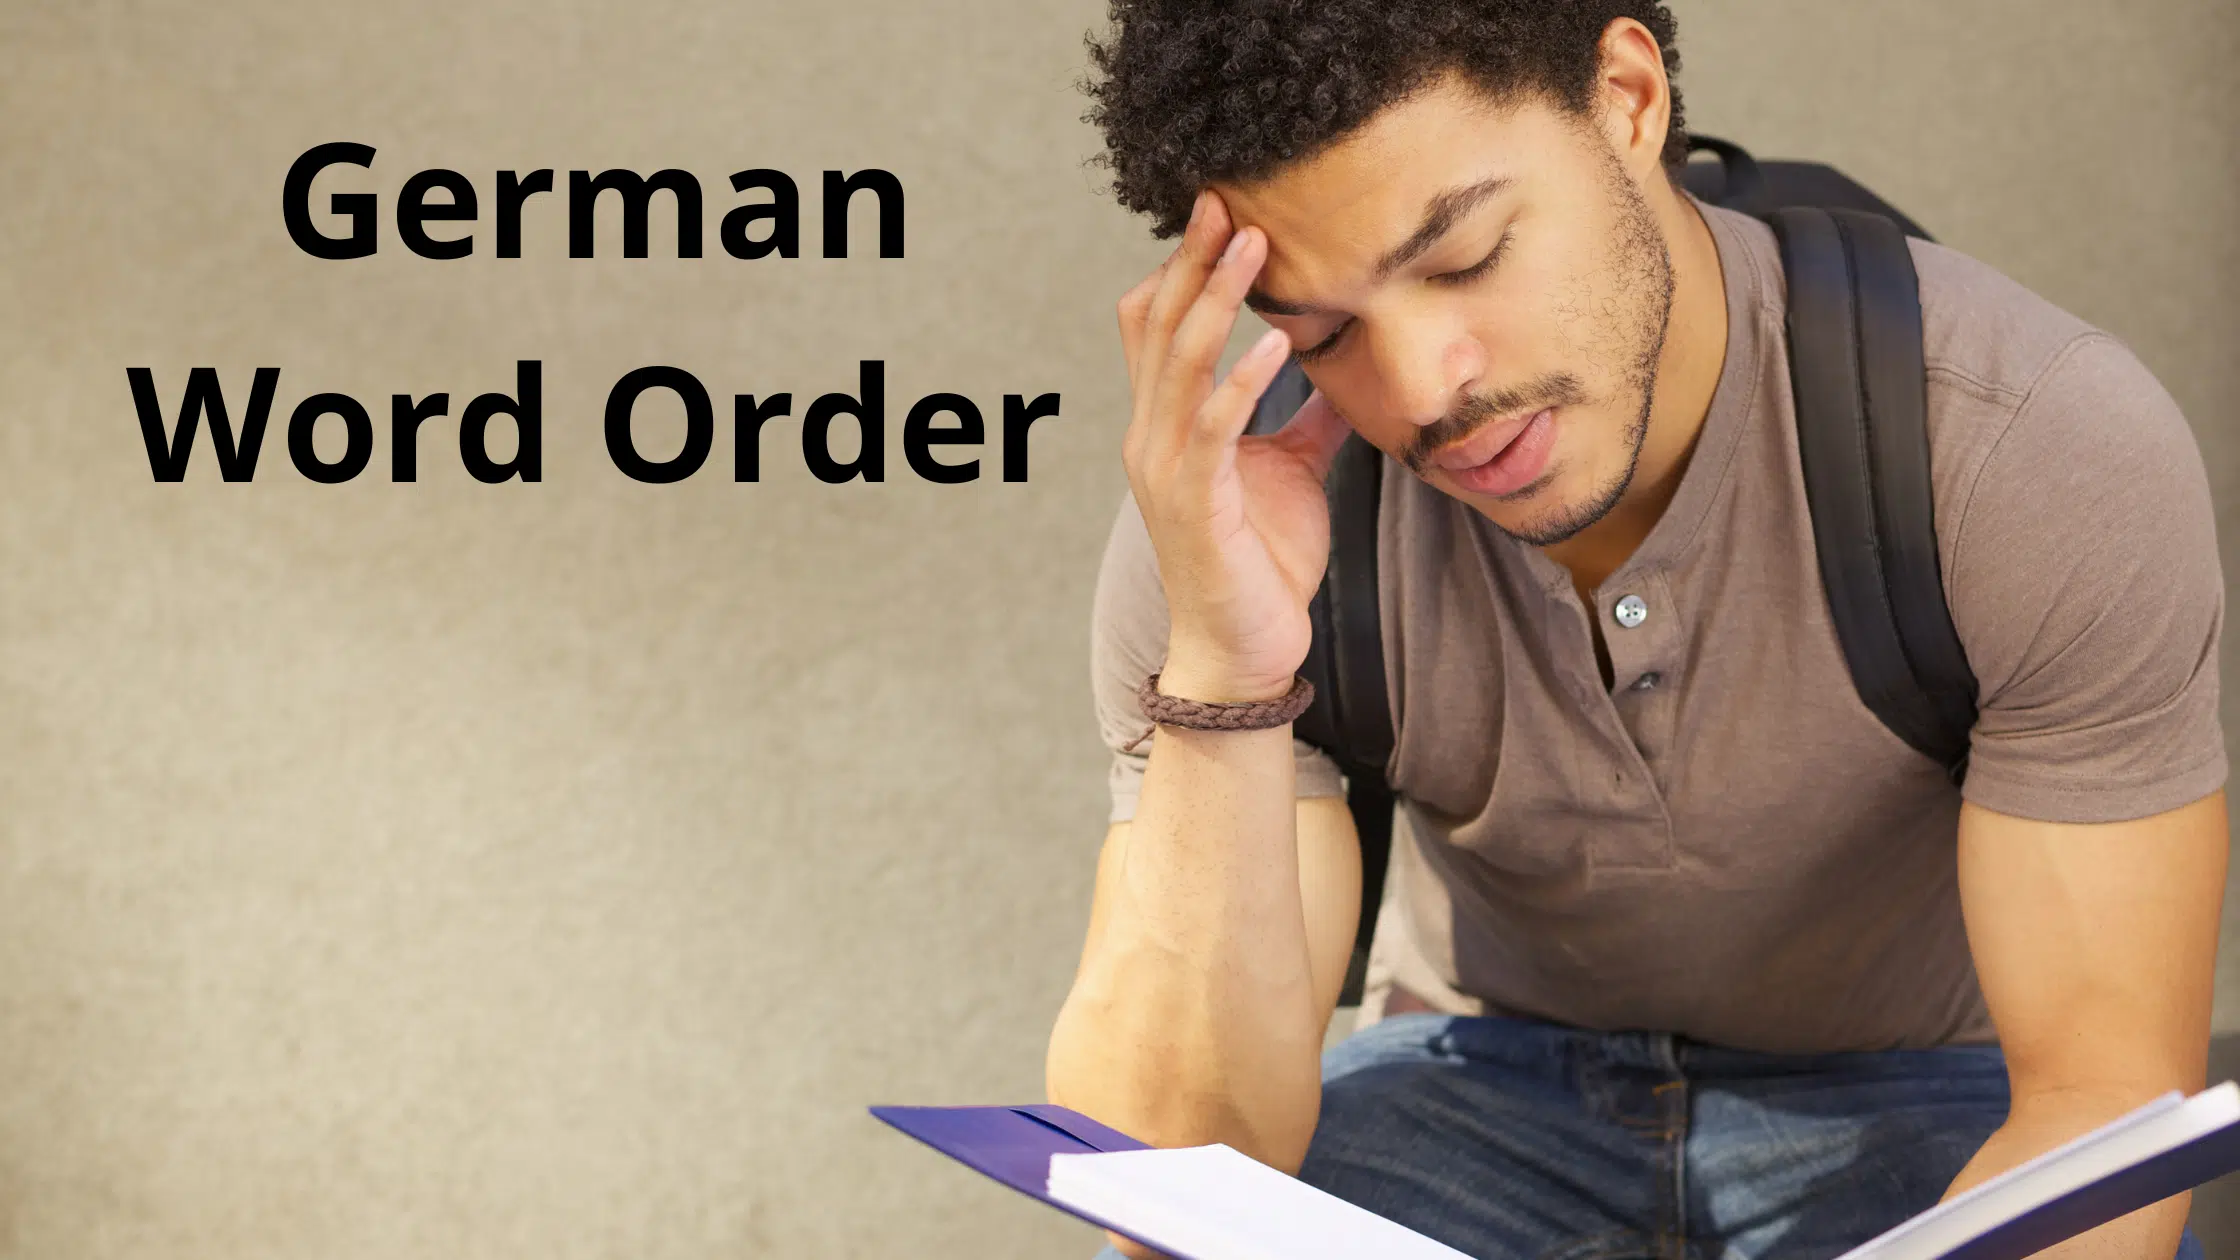 German Word Order - When does it change?